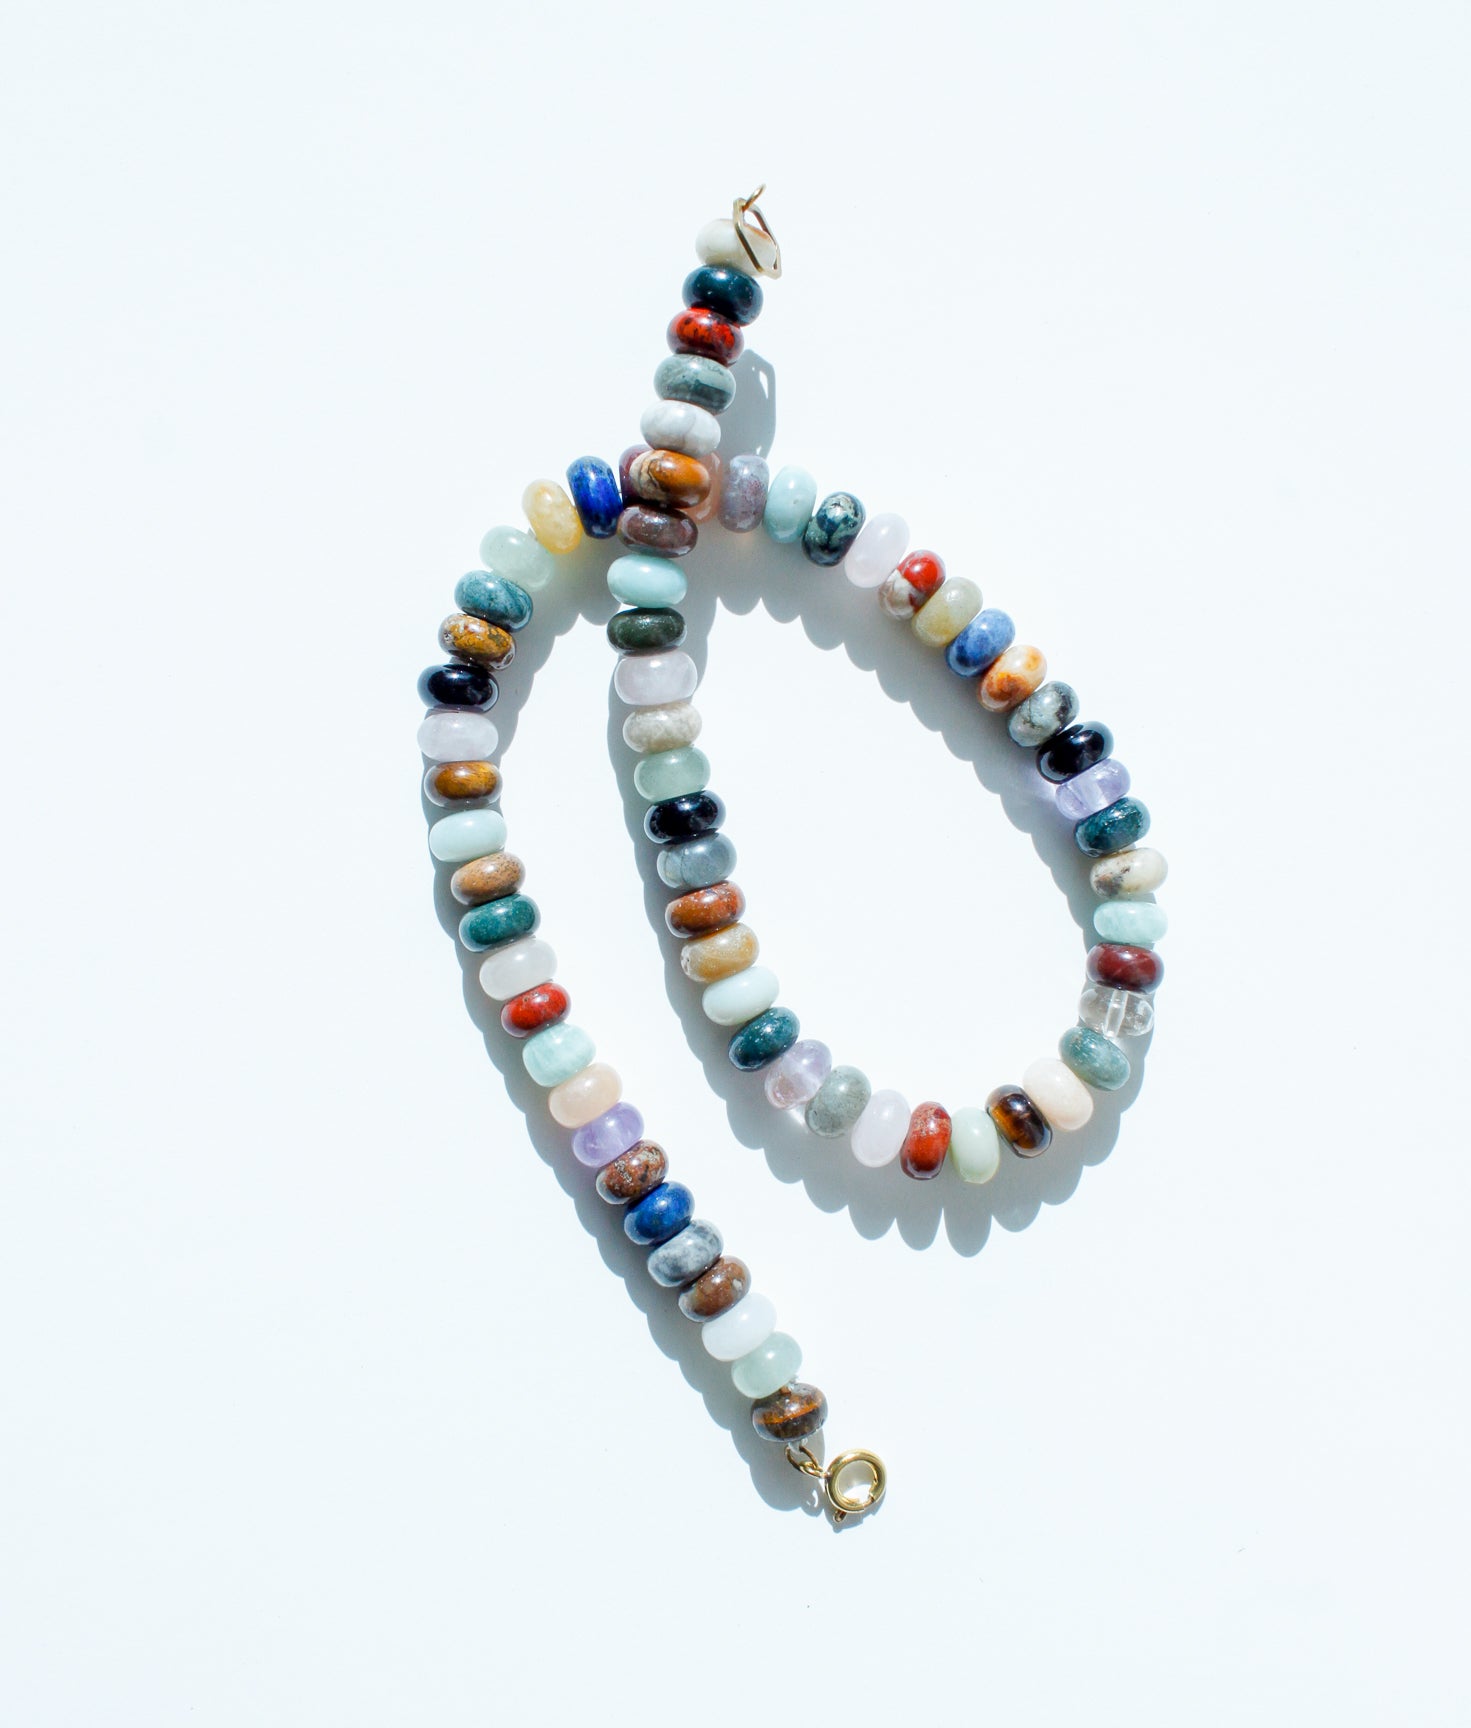 Stone Necklace - Hybrid Rondelles